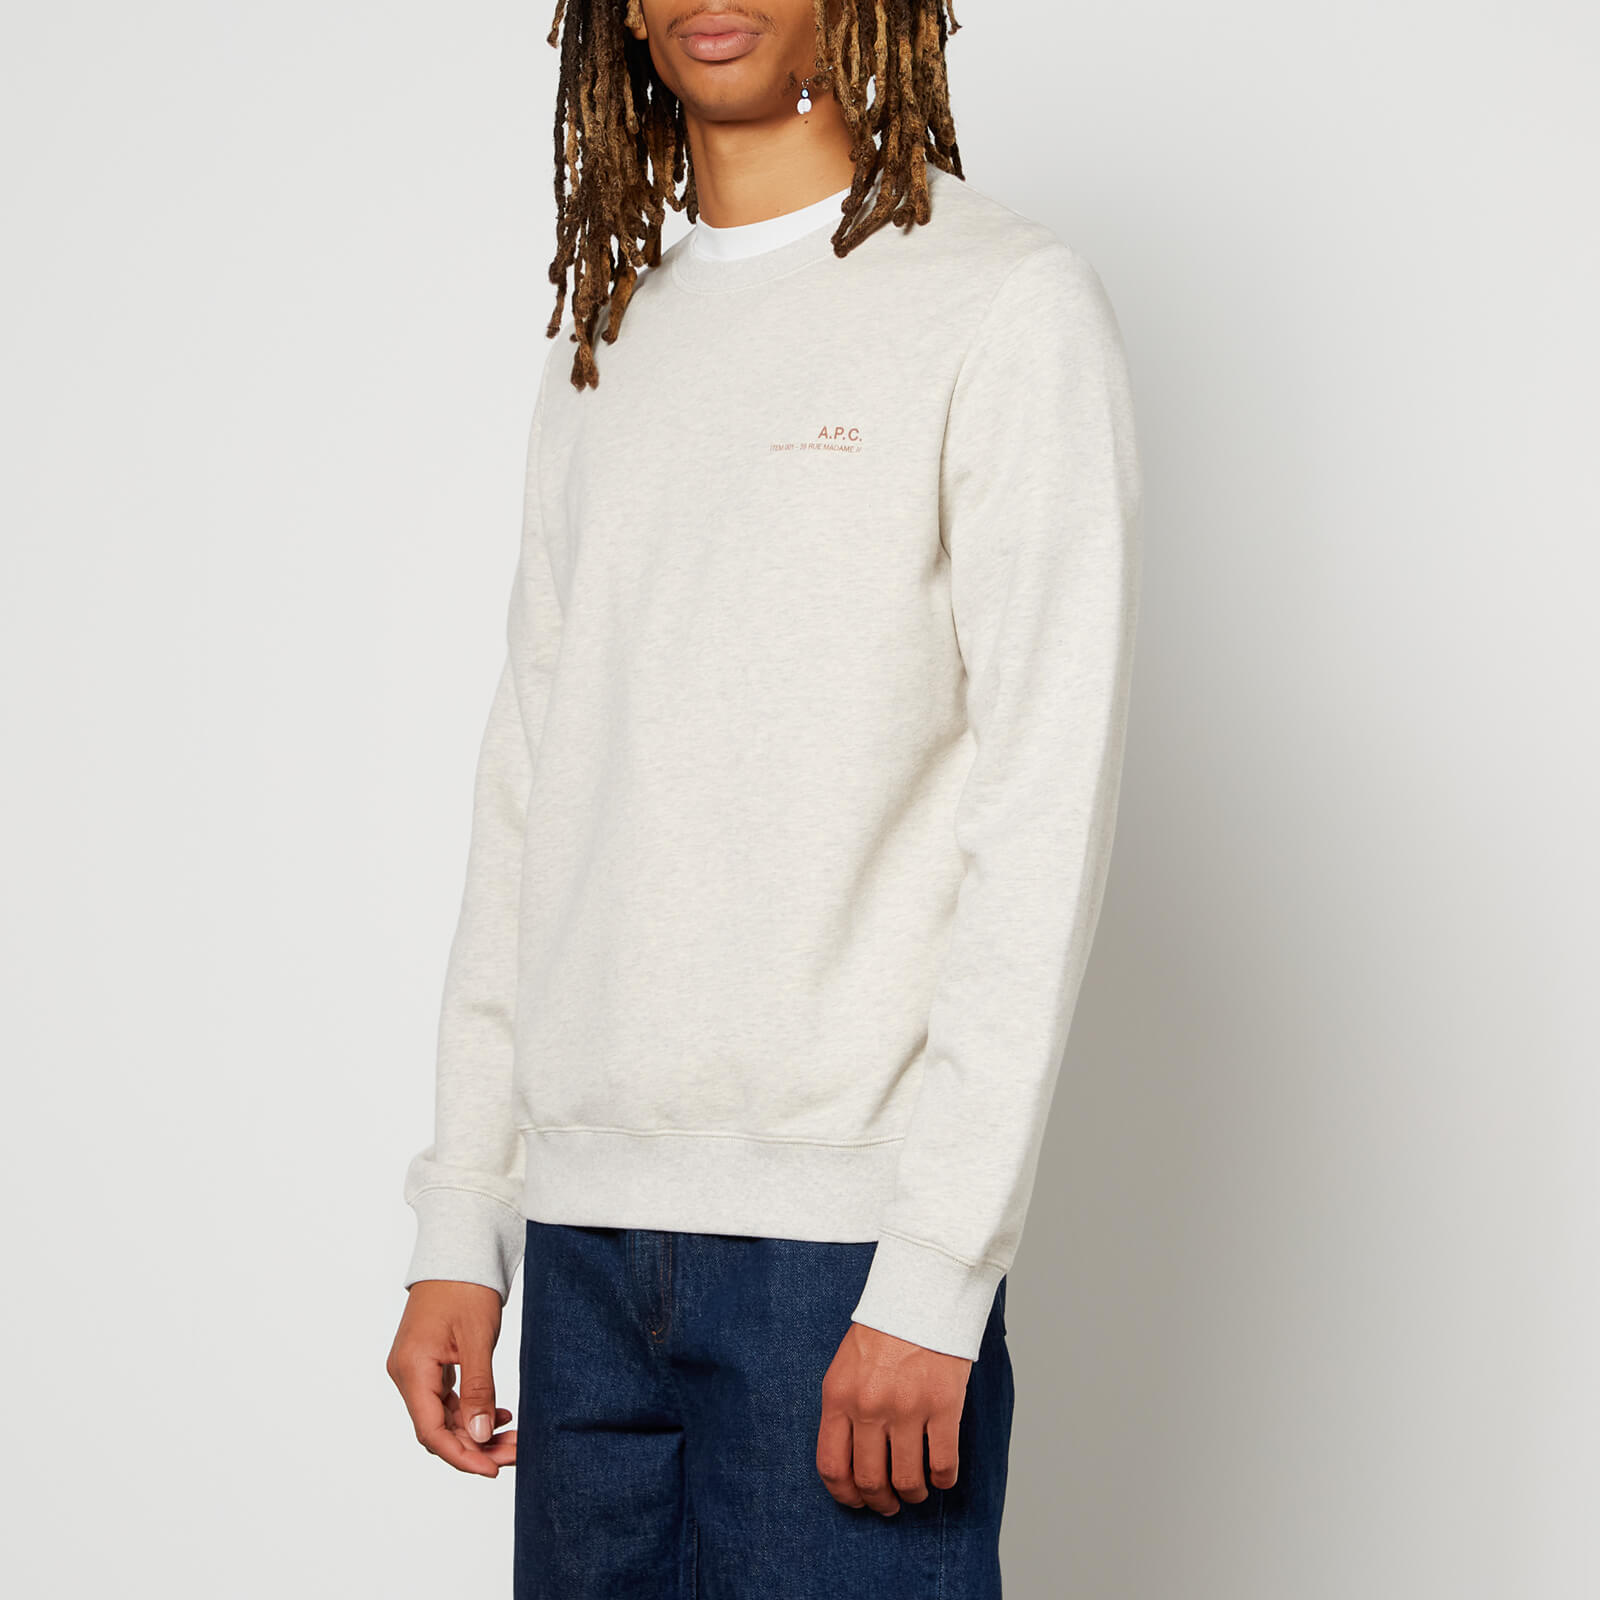 A.P.C. cotton-jersey sweatshirt - S